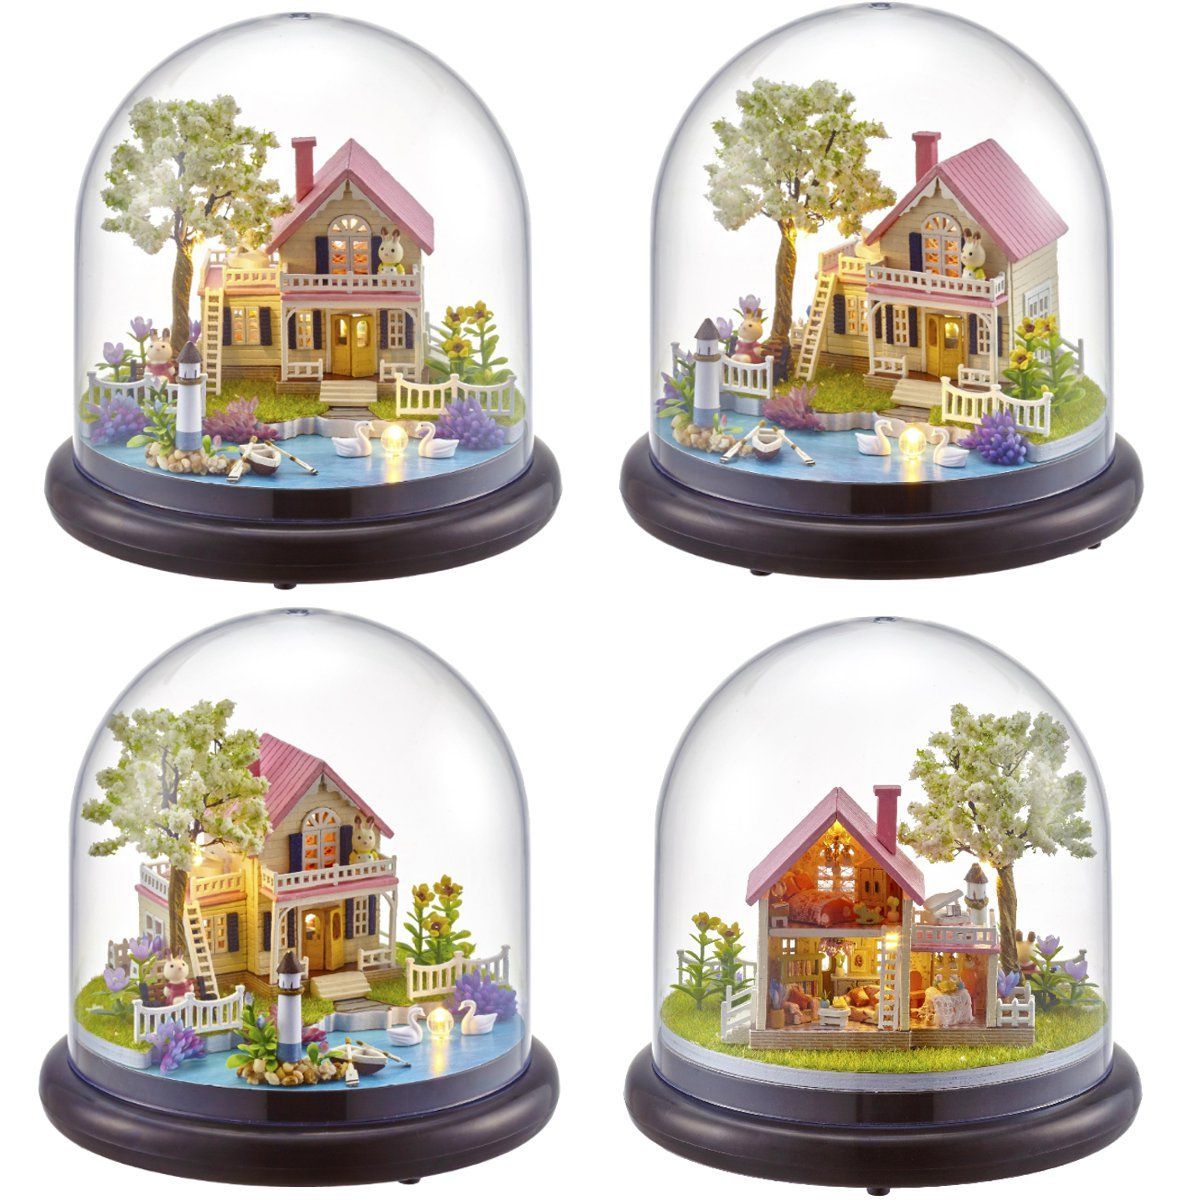 DIY-Music-Box-Dolls-House-Dollhouse-Handmade-Miniature-Kids-Kits-Toy-Gift-1350408